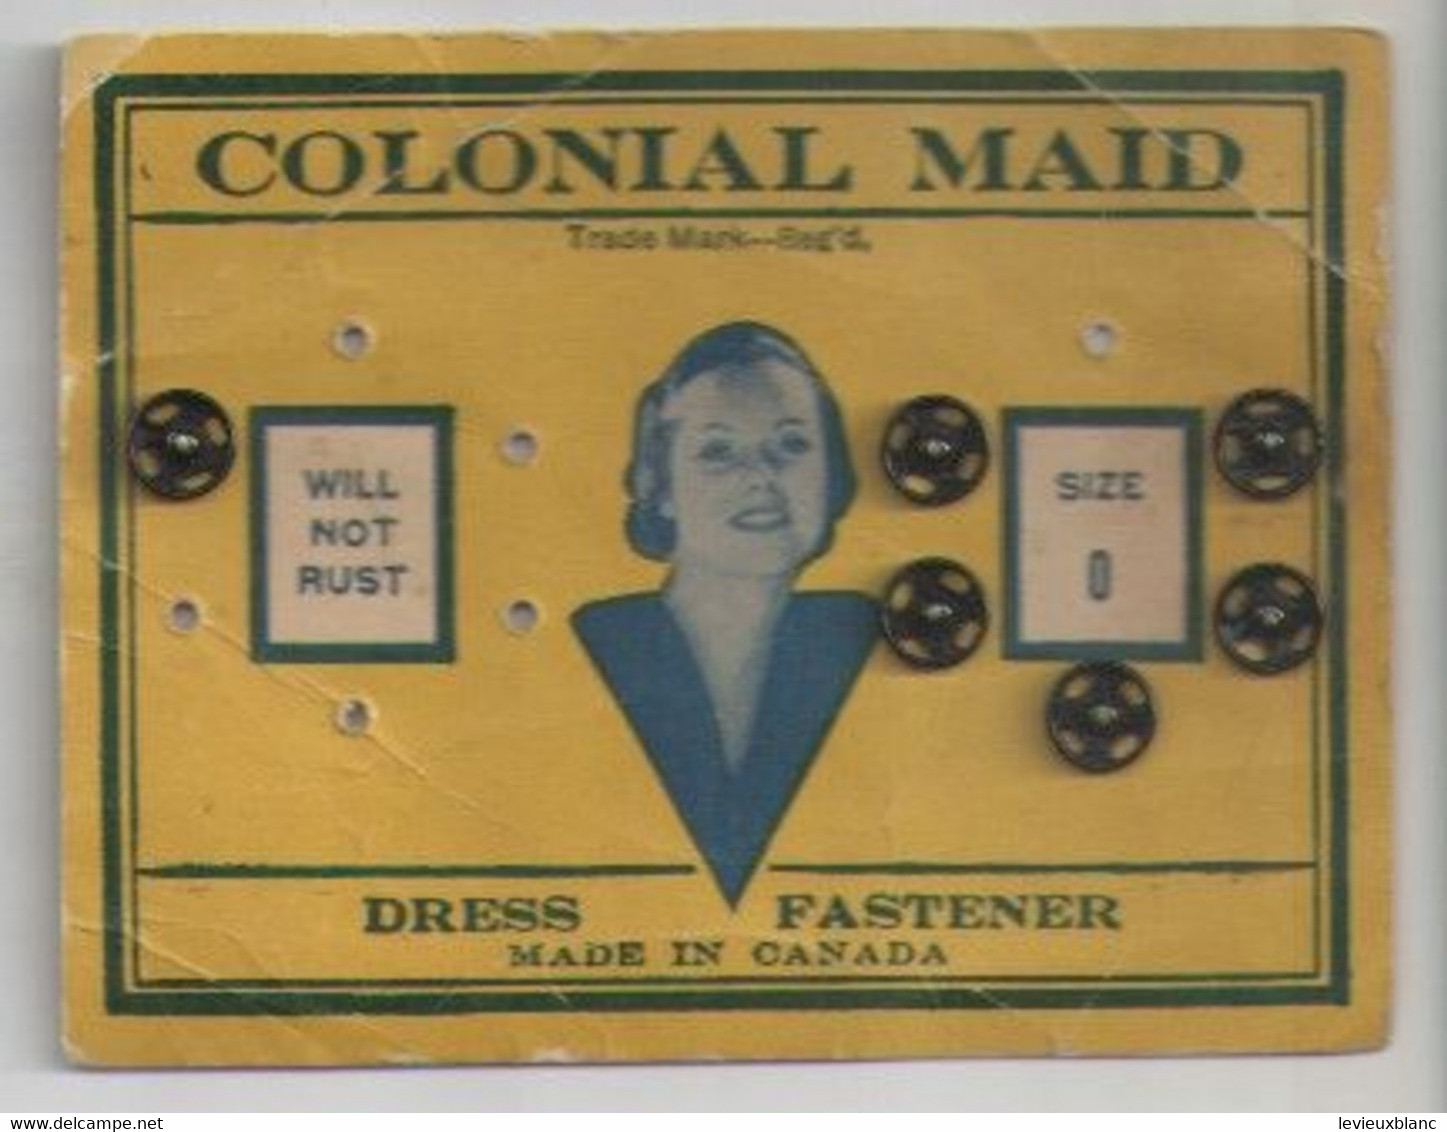 Mercerie / Boutons Pressions/Colonial Maid /Dress Fastener/Made In Canada /Carton De Présentation/Vers 1950-60     MER87 - Knöpfe